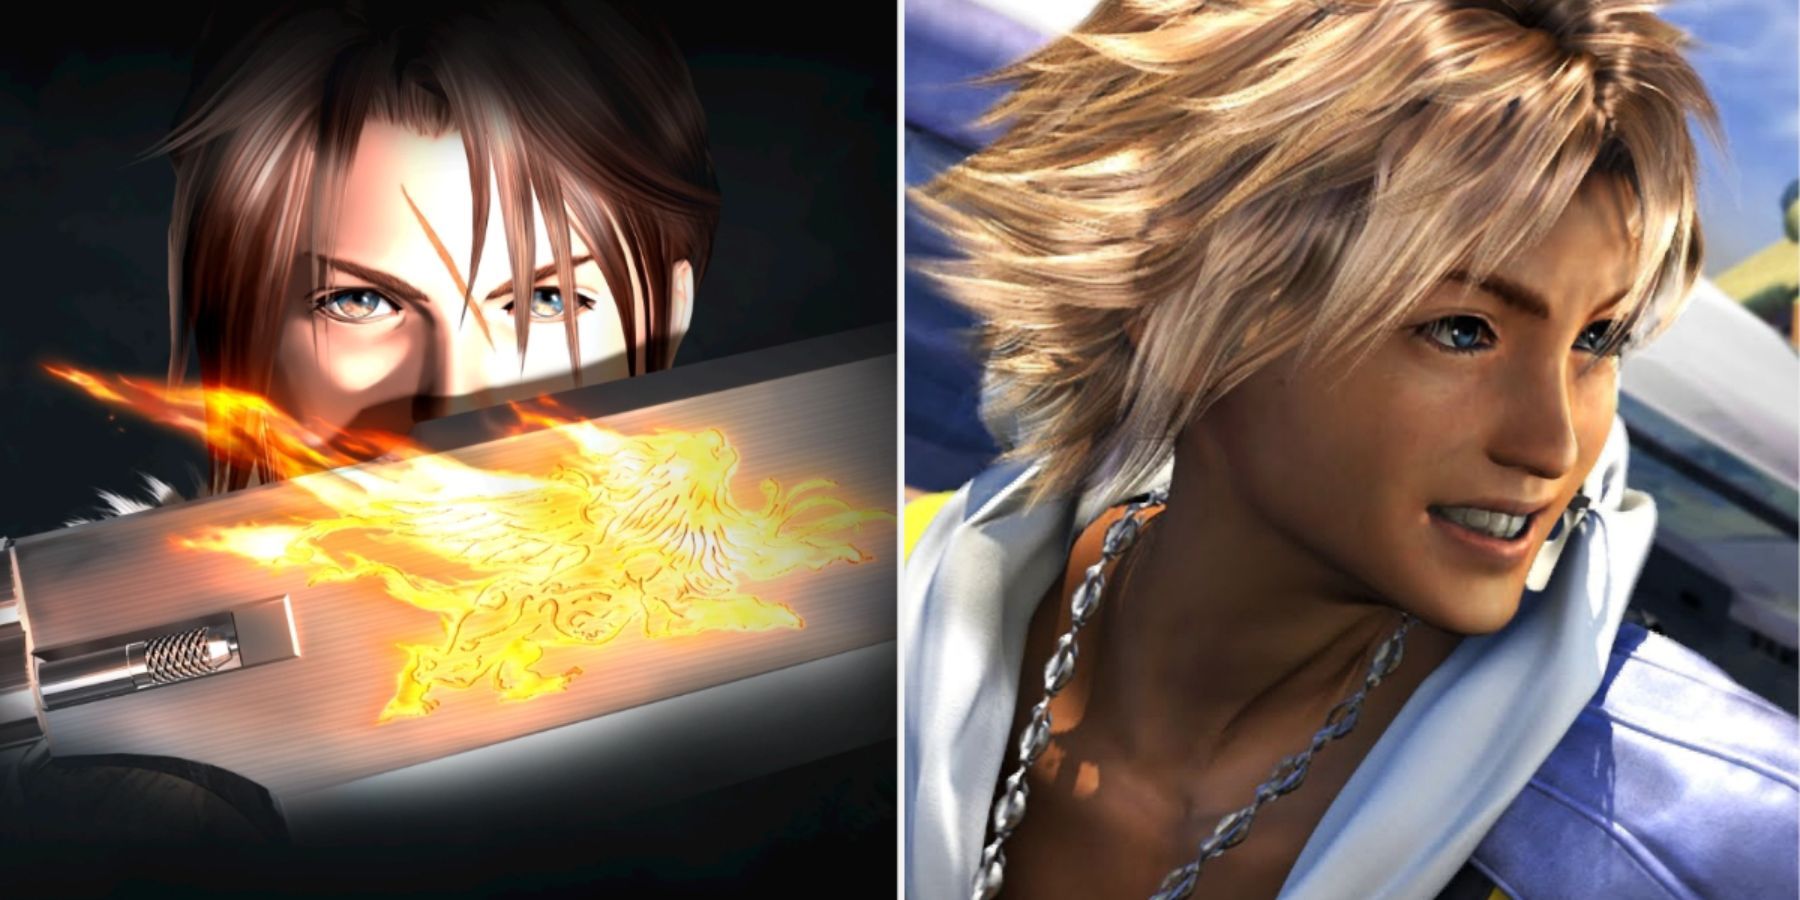 Final Fantasy VII Remake - Metacritic